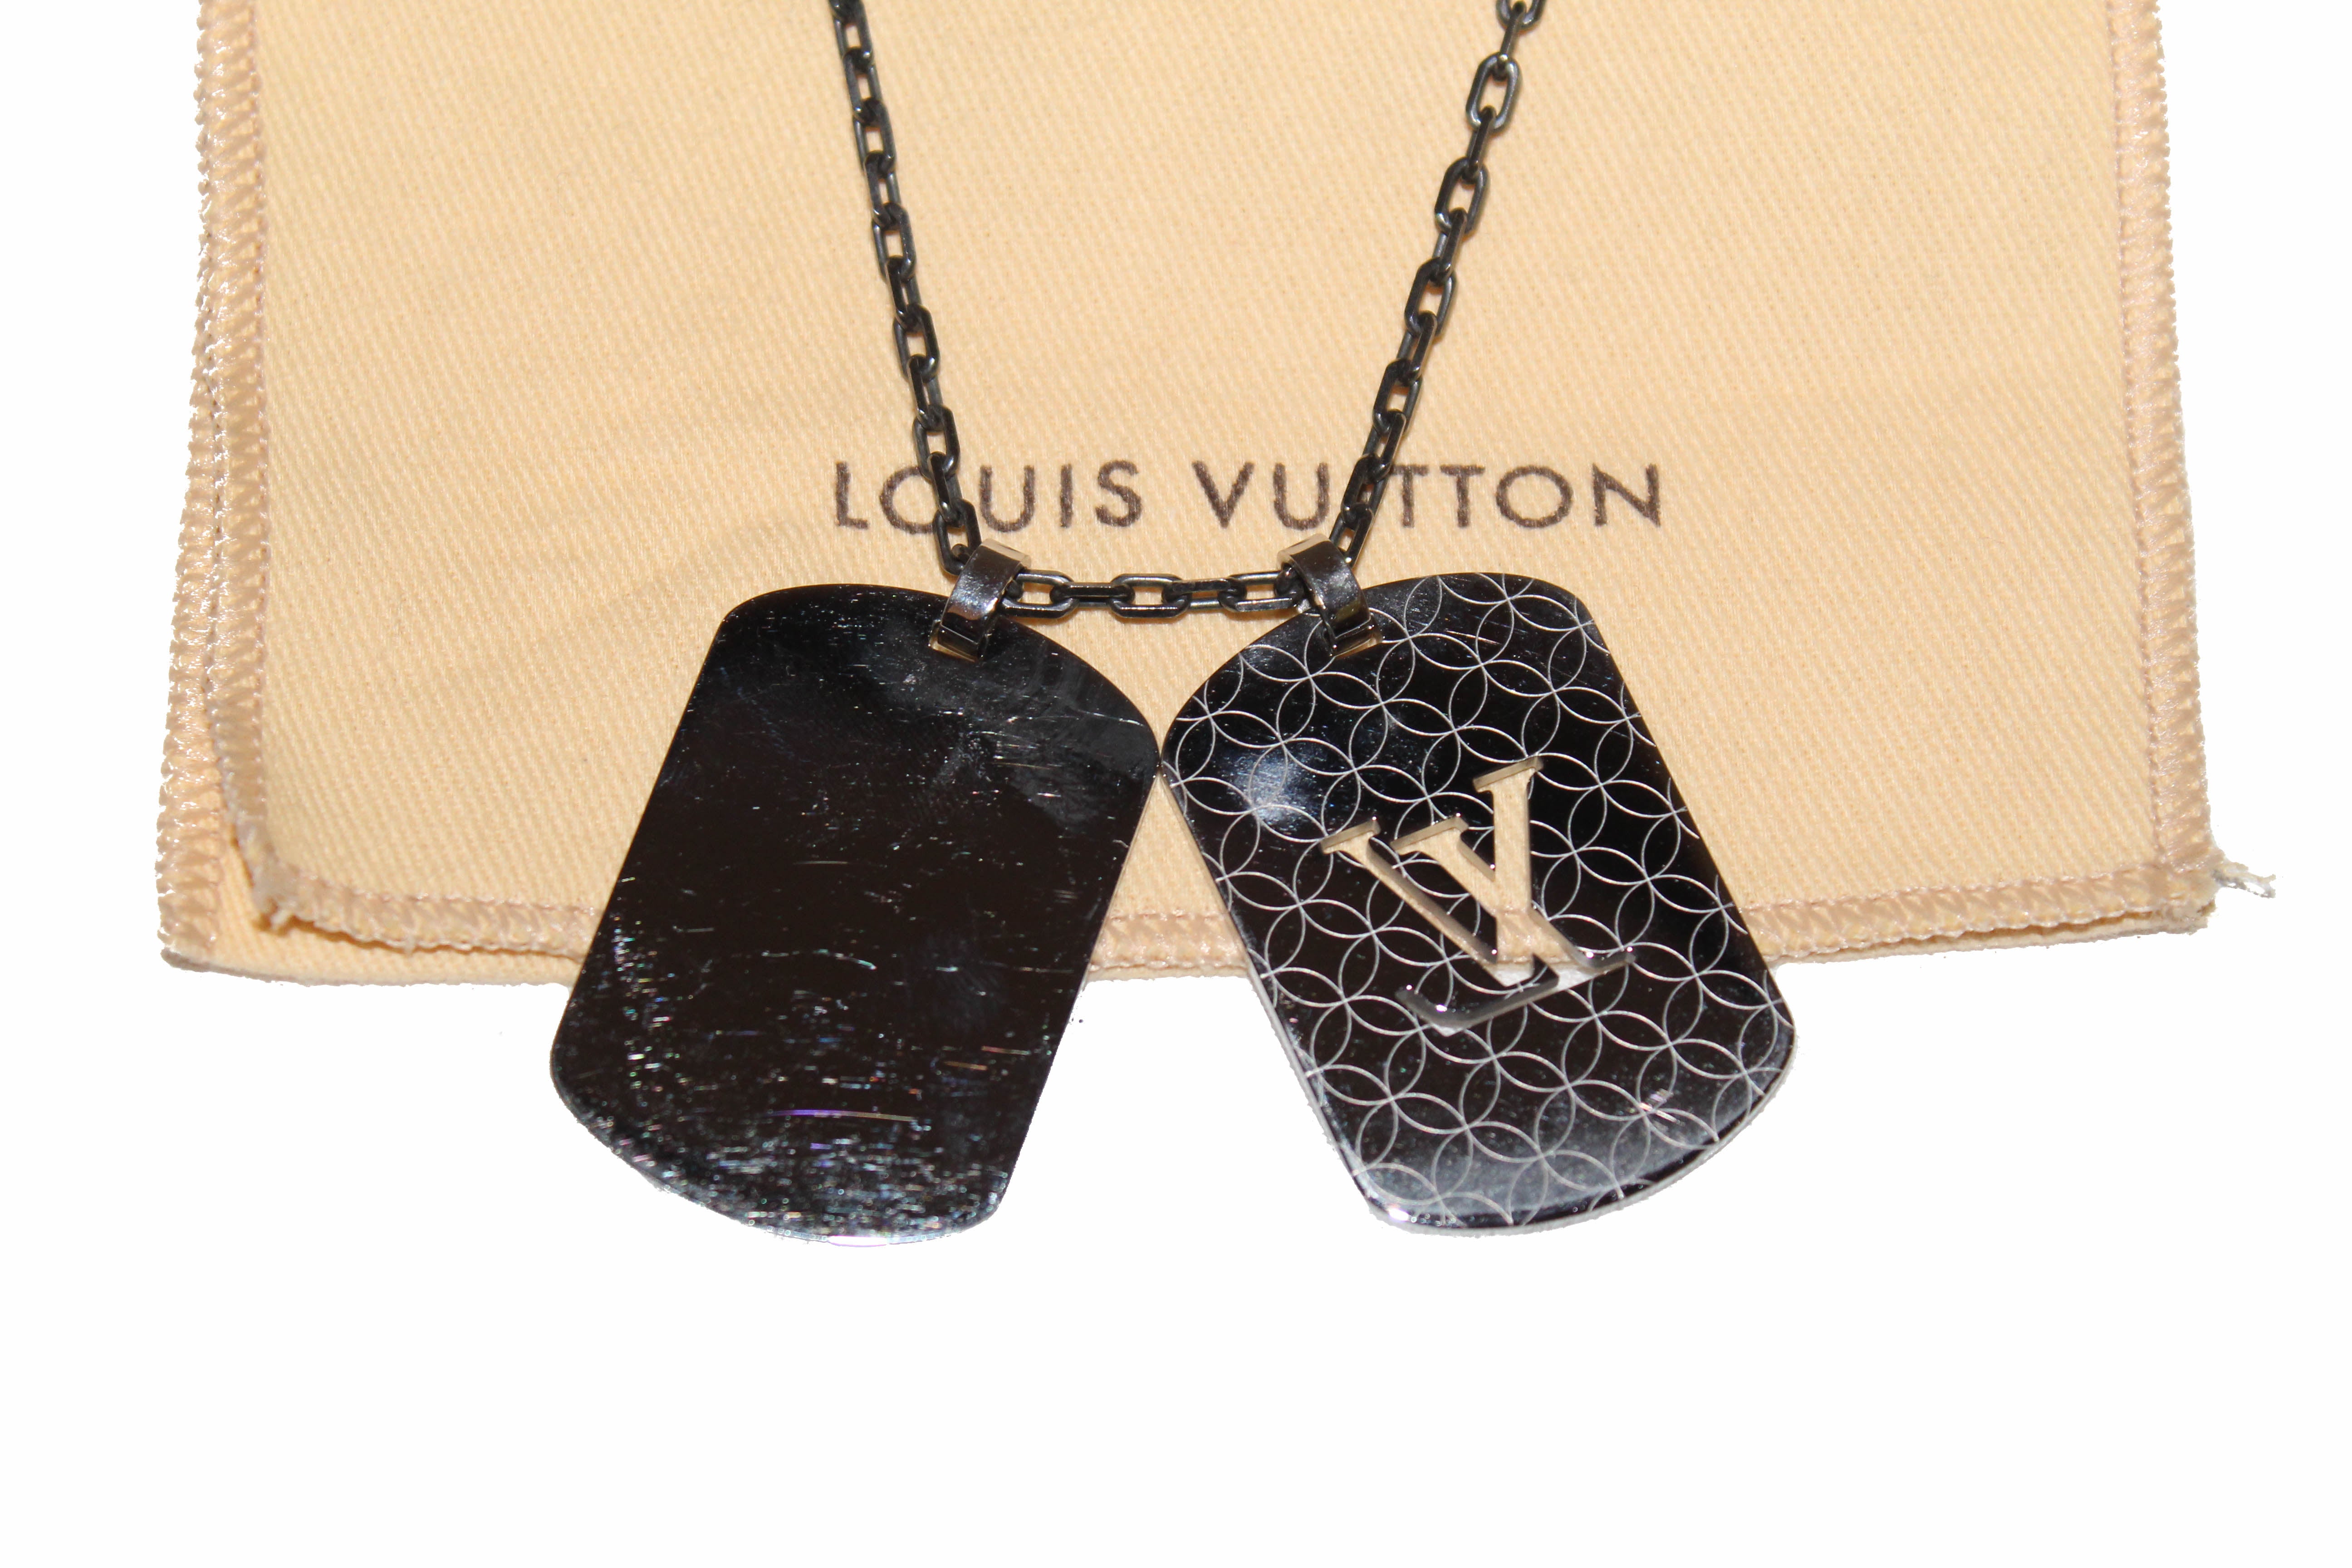 Louis Vuitton Monogram Eclipse Plate Necklace - Palladium-Plated